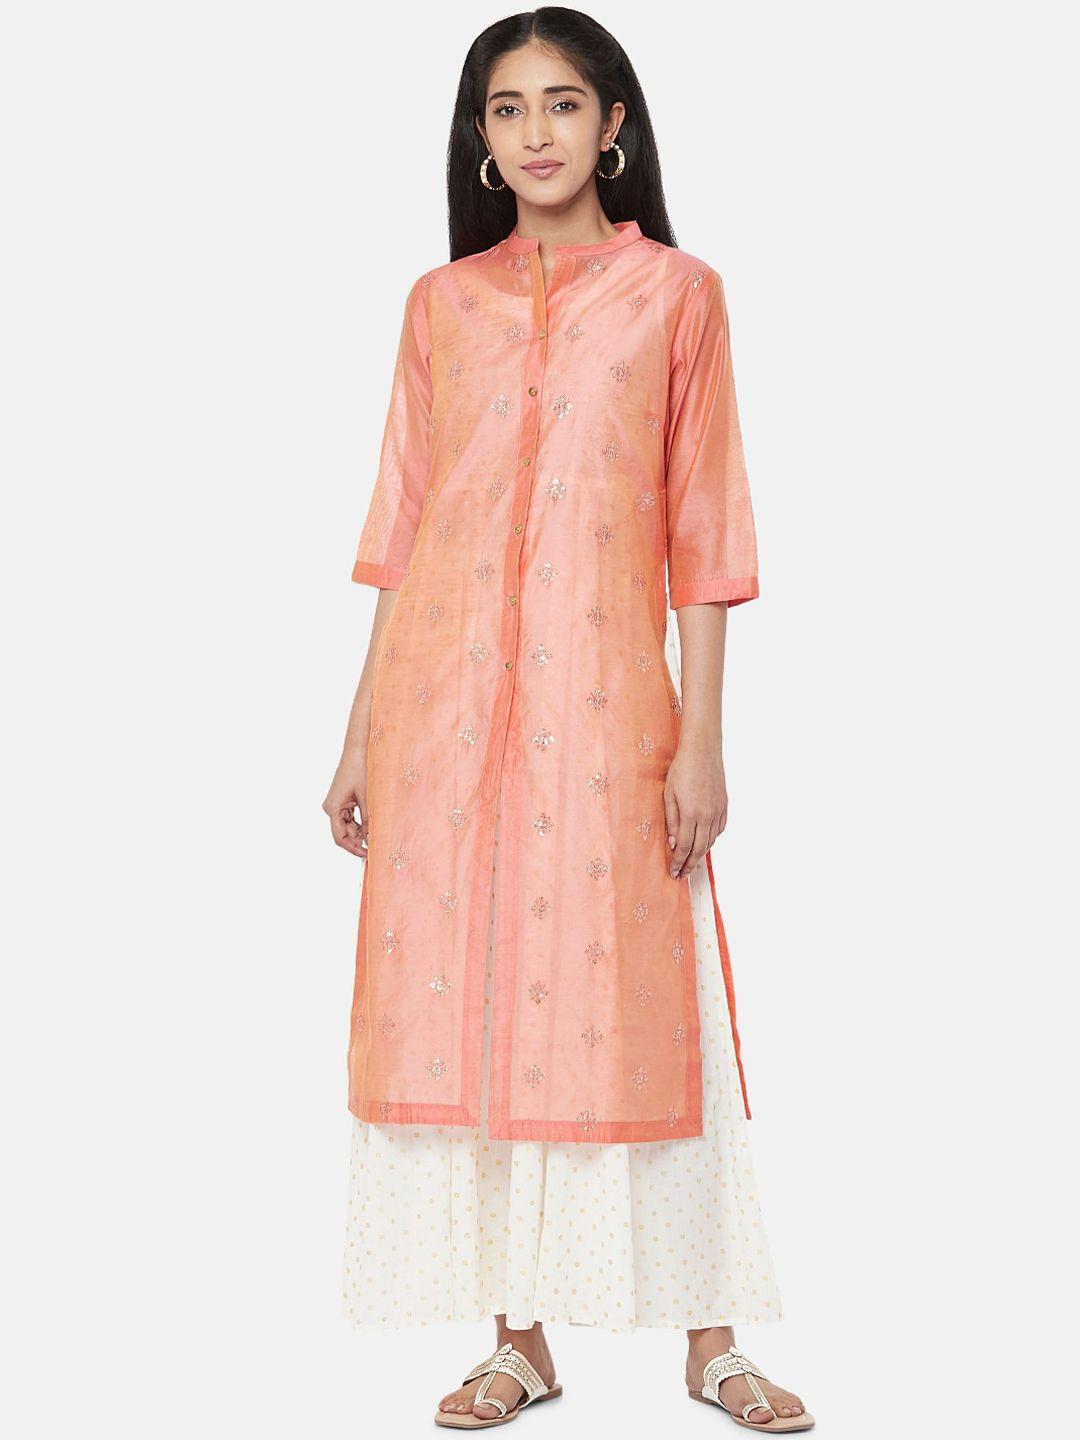 rangmanch by pantaloons pink & white a-line layered maxi dress